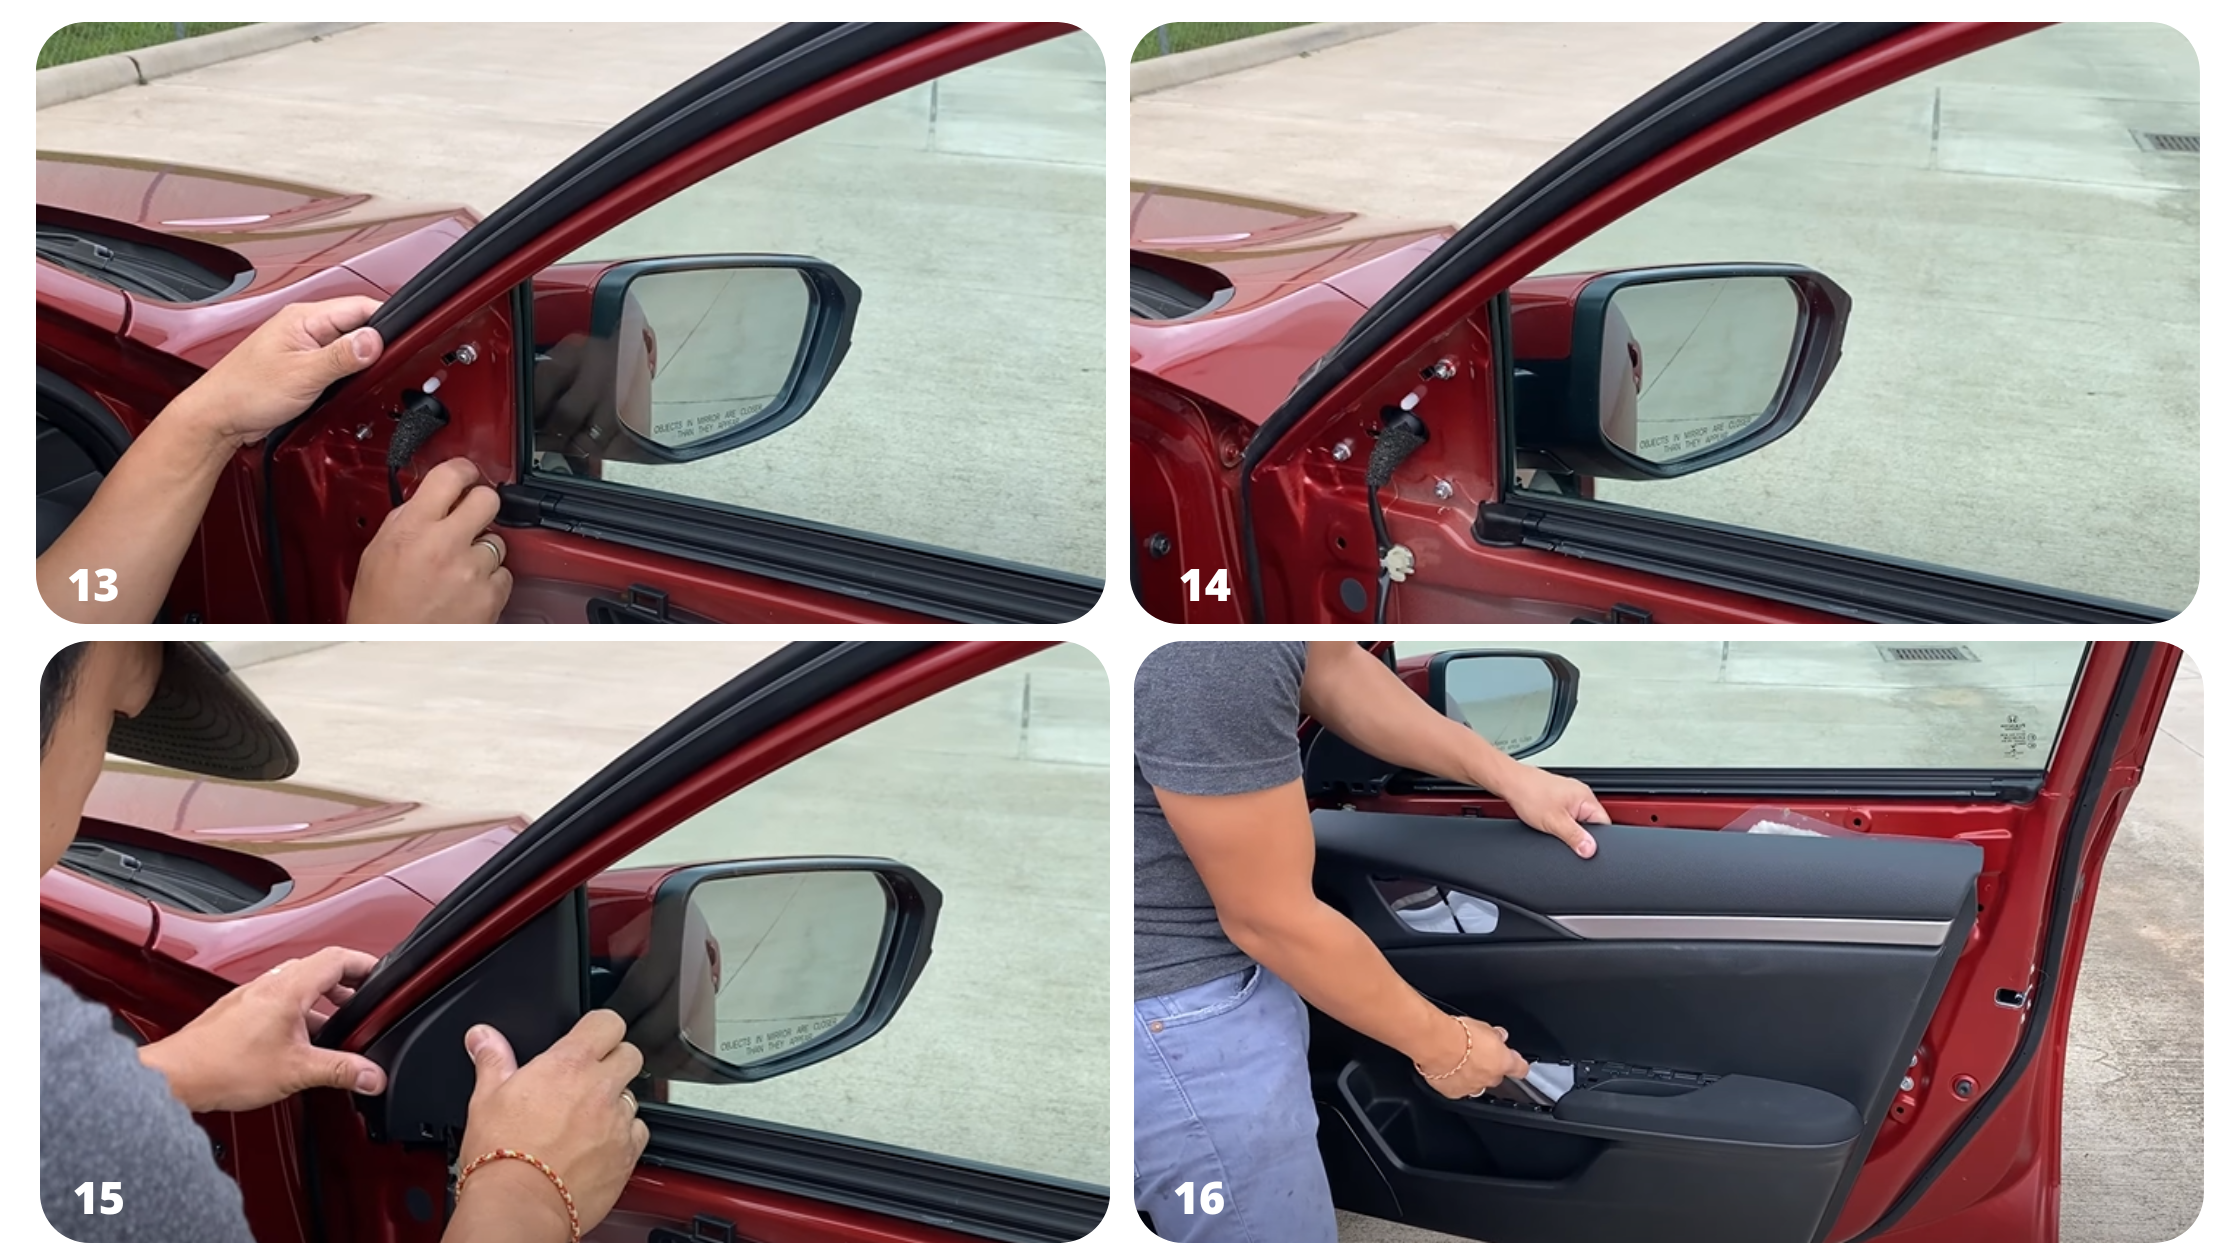 Replacing a 2016-2021 Honda Civic Side View Mirror steps 13-16